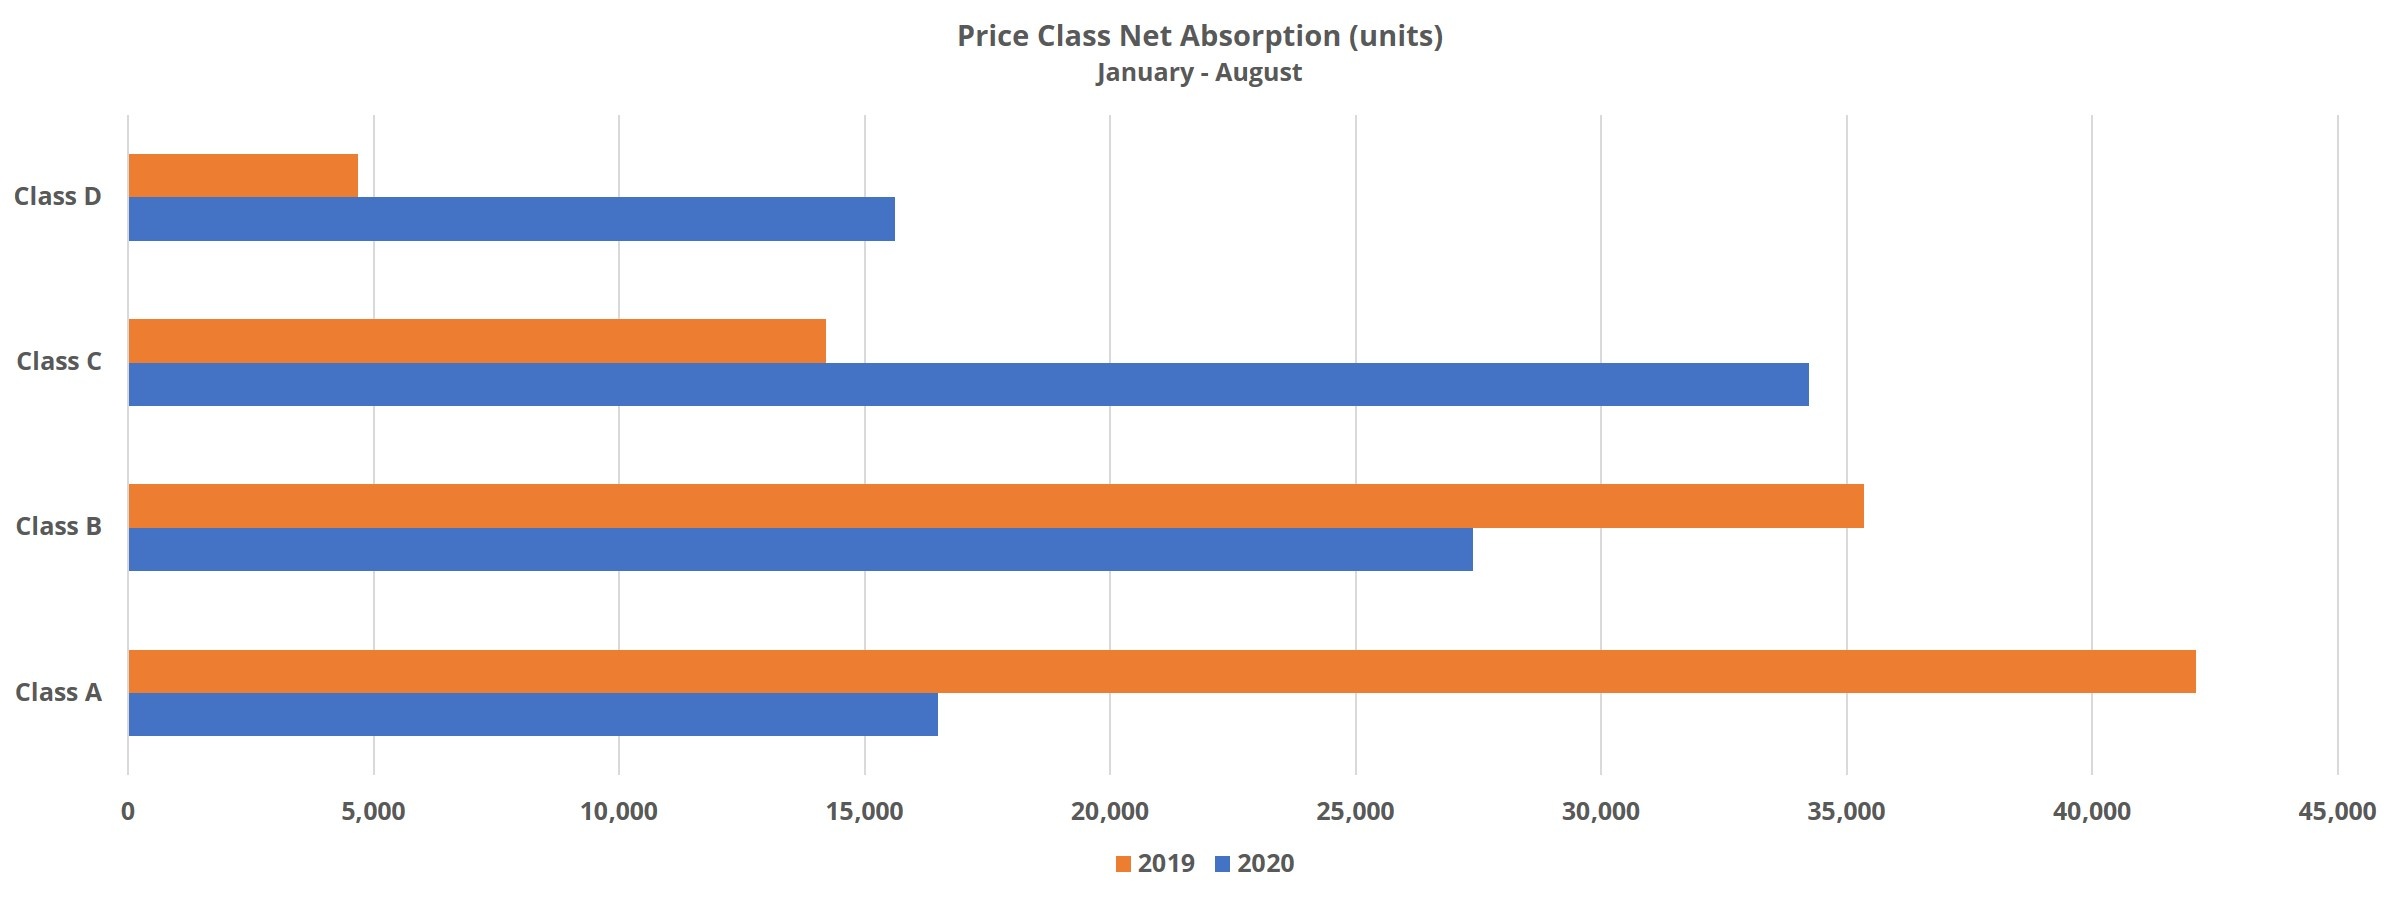 Price Class Net Absorption (units)